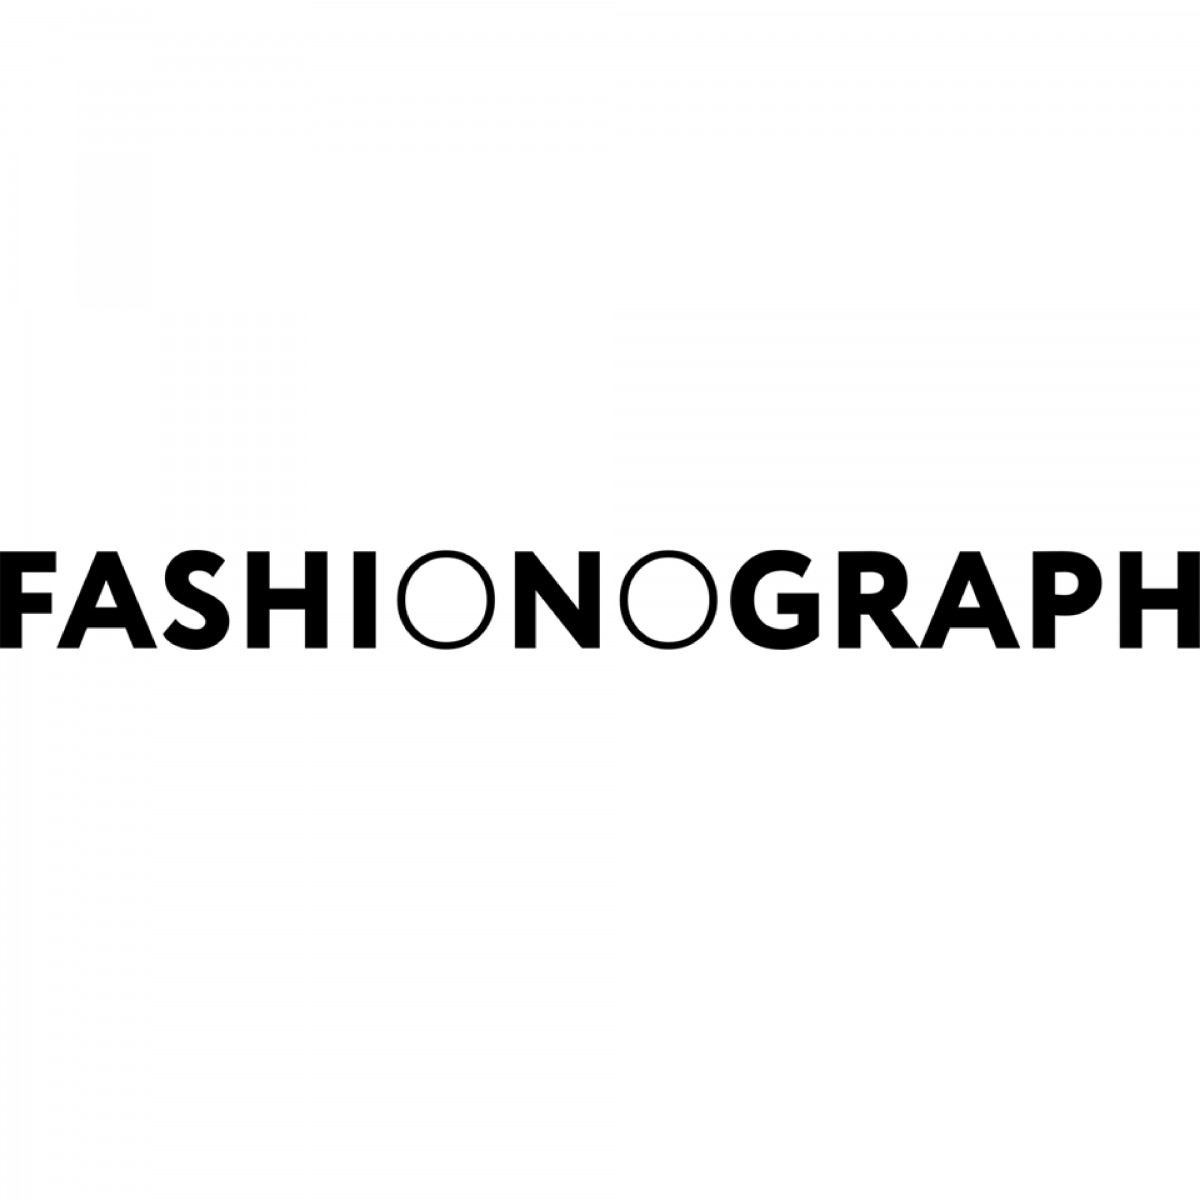 Fashionograph